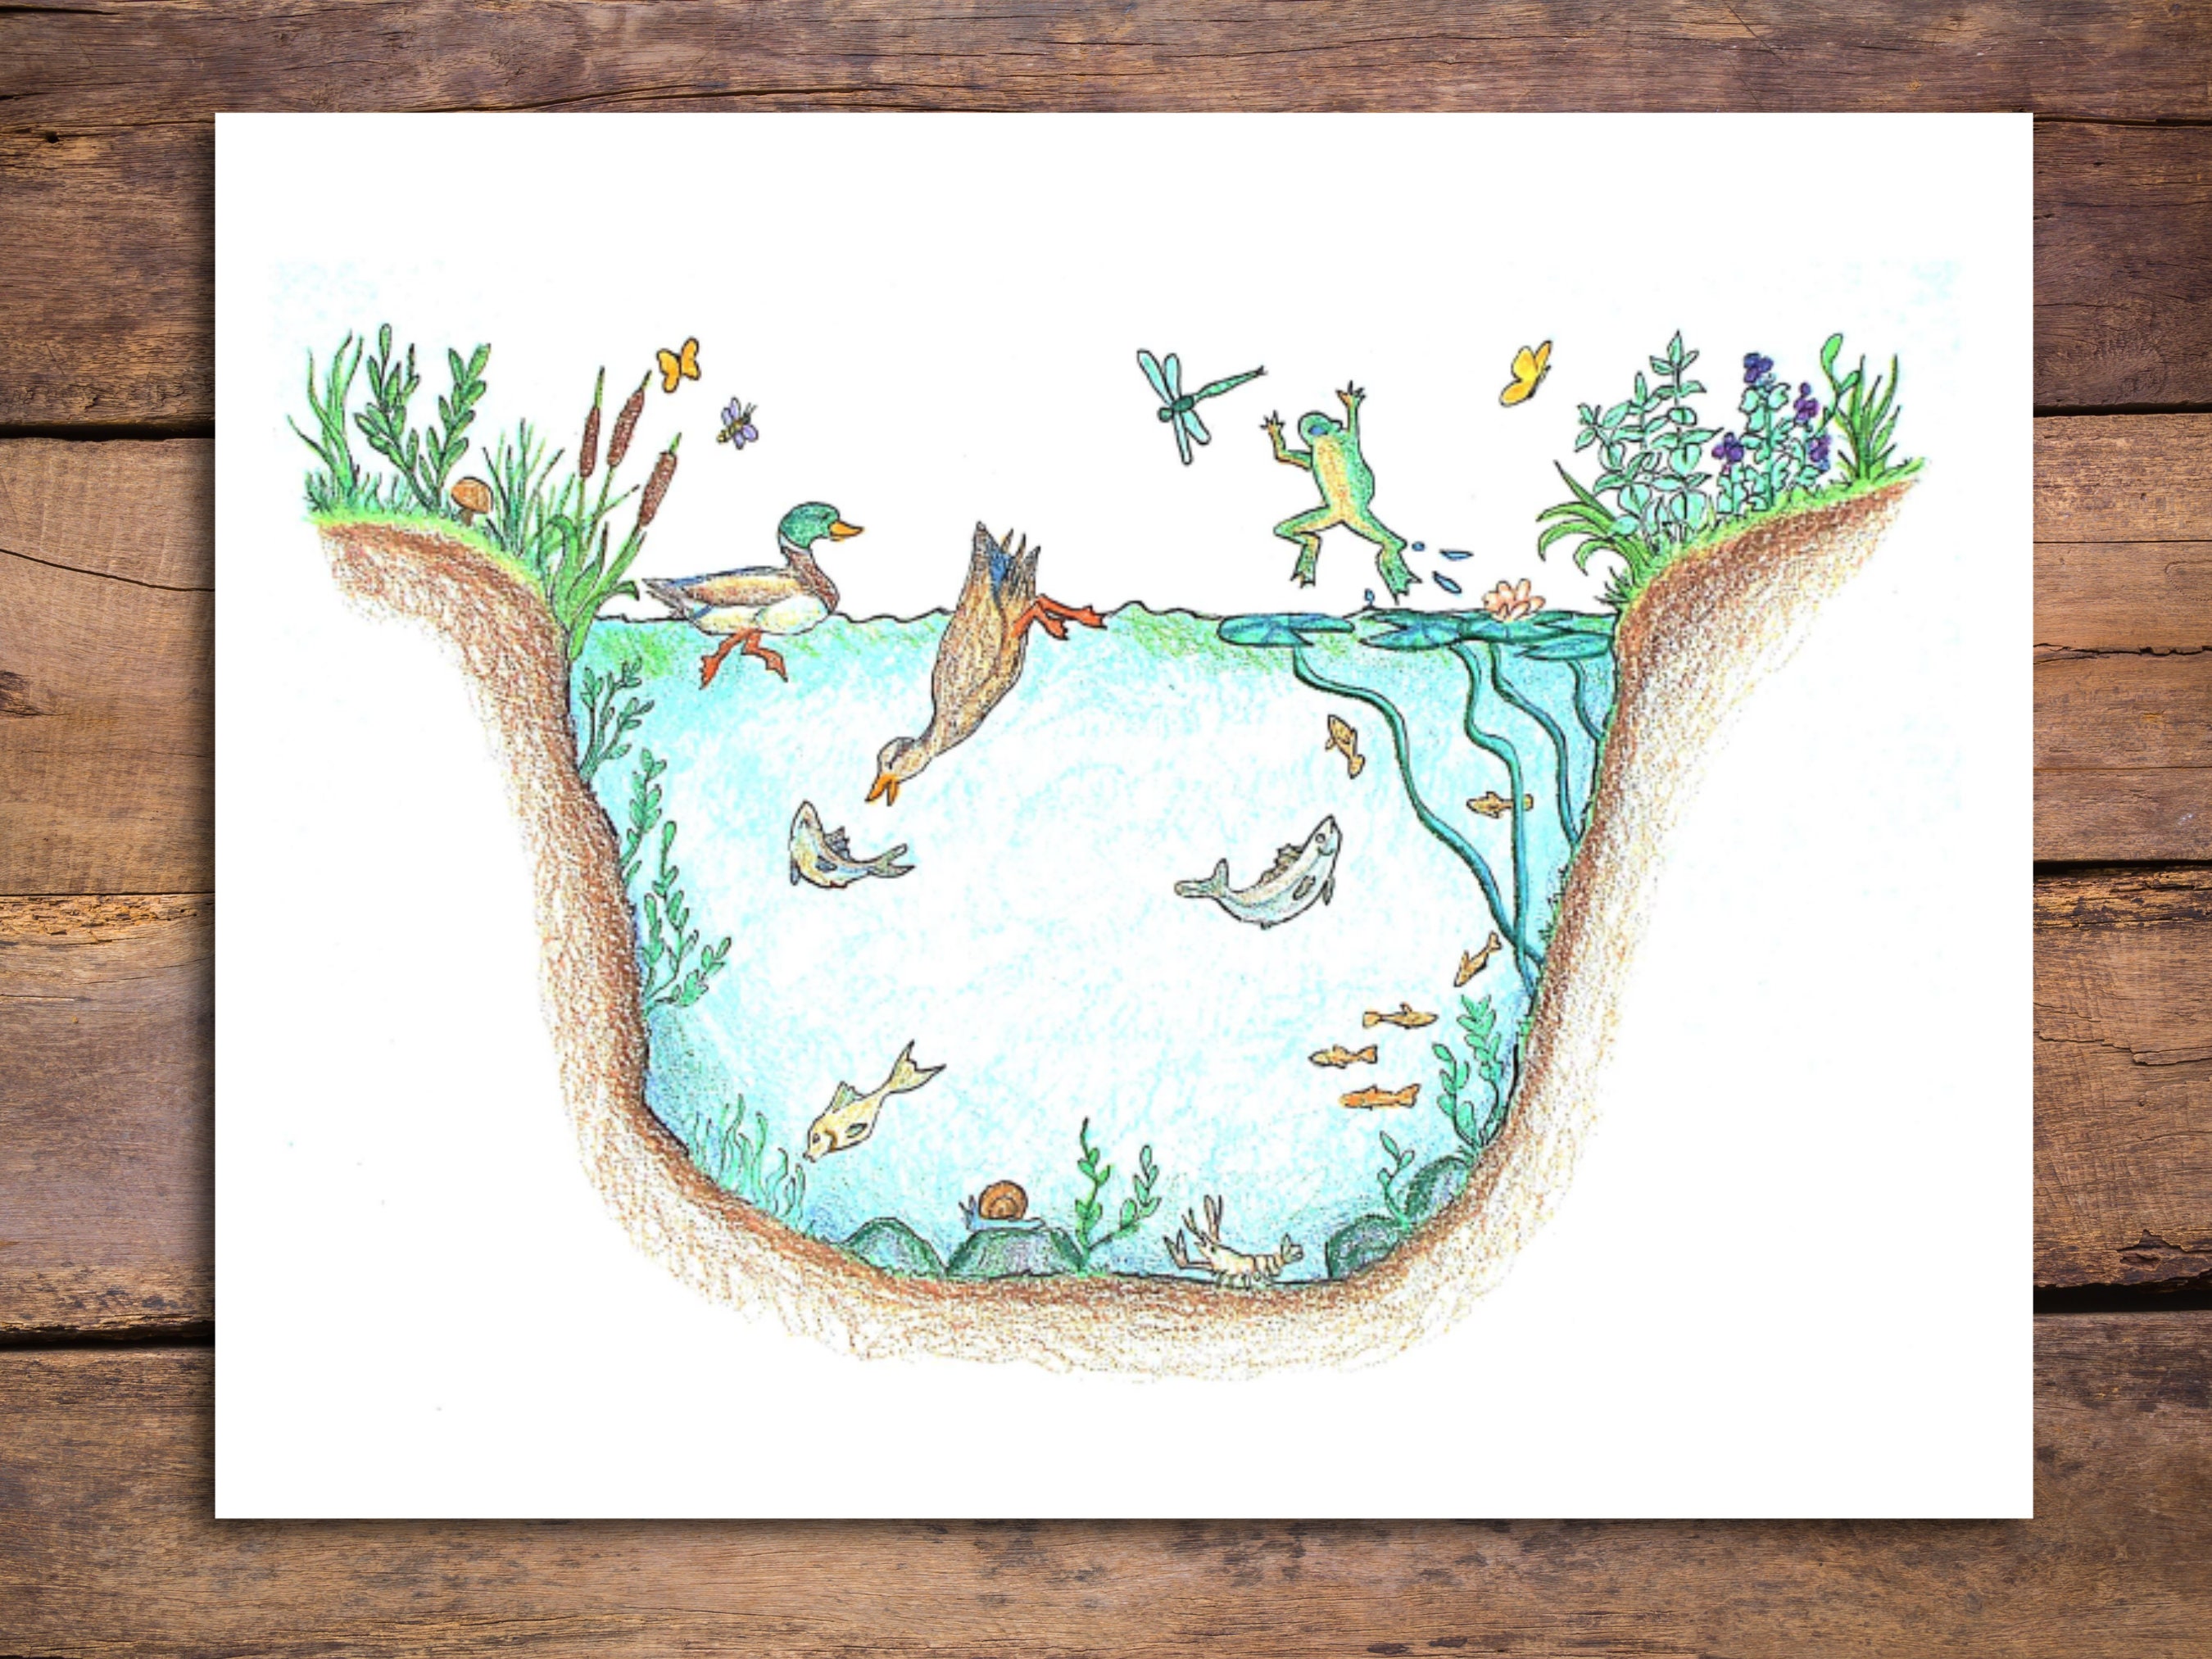 Pond Ecosystem Illustrations & Vectors